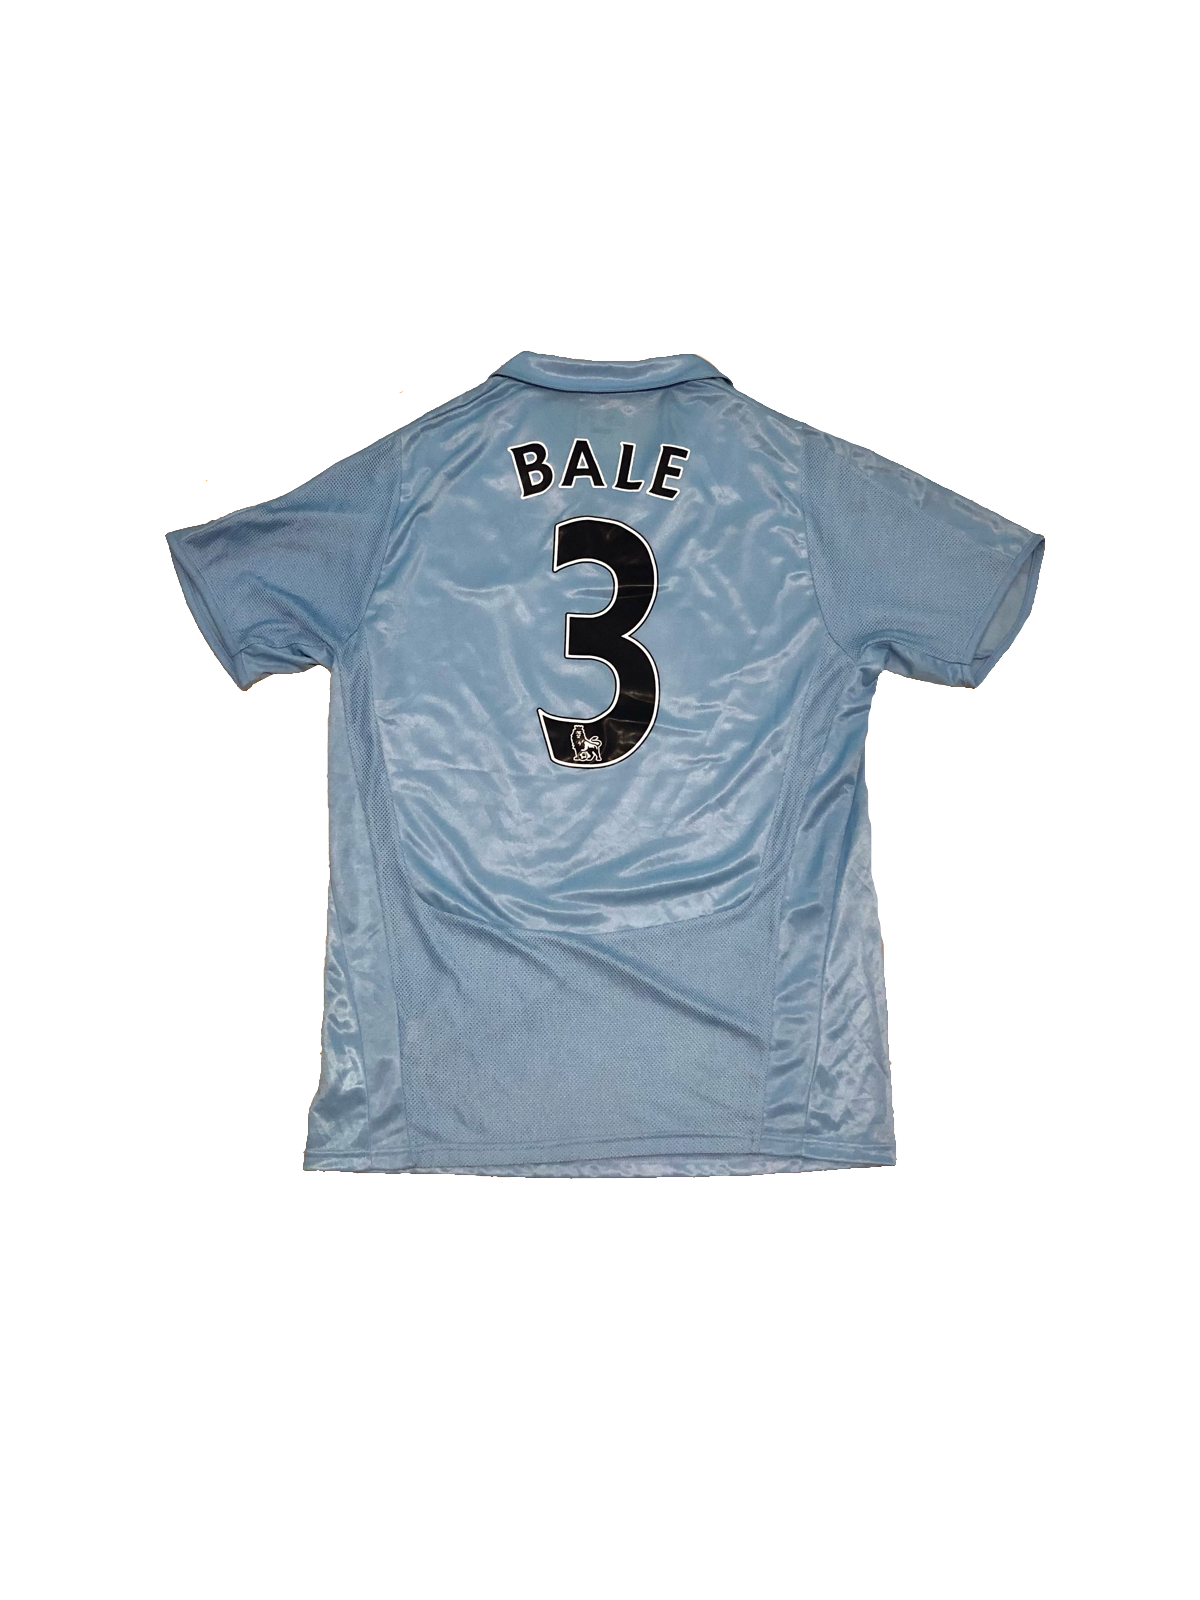 Tottenham Hotspur 2008/09 Away Shirt Bale #3 (Great)